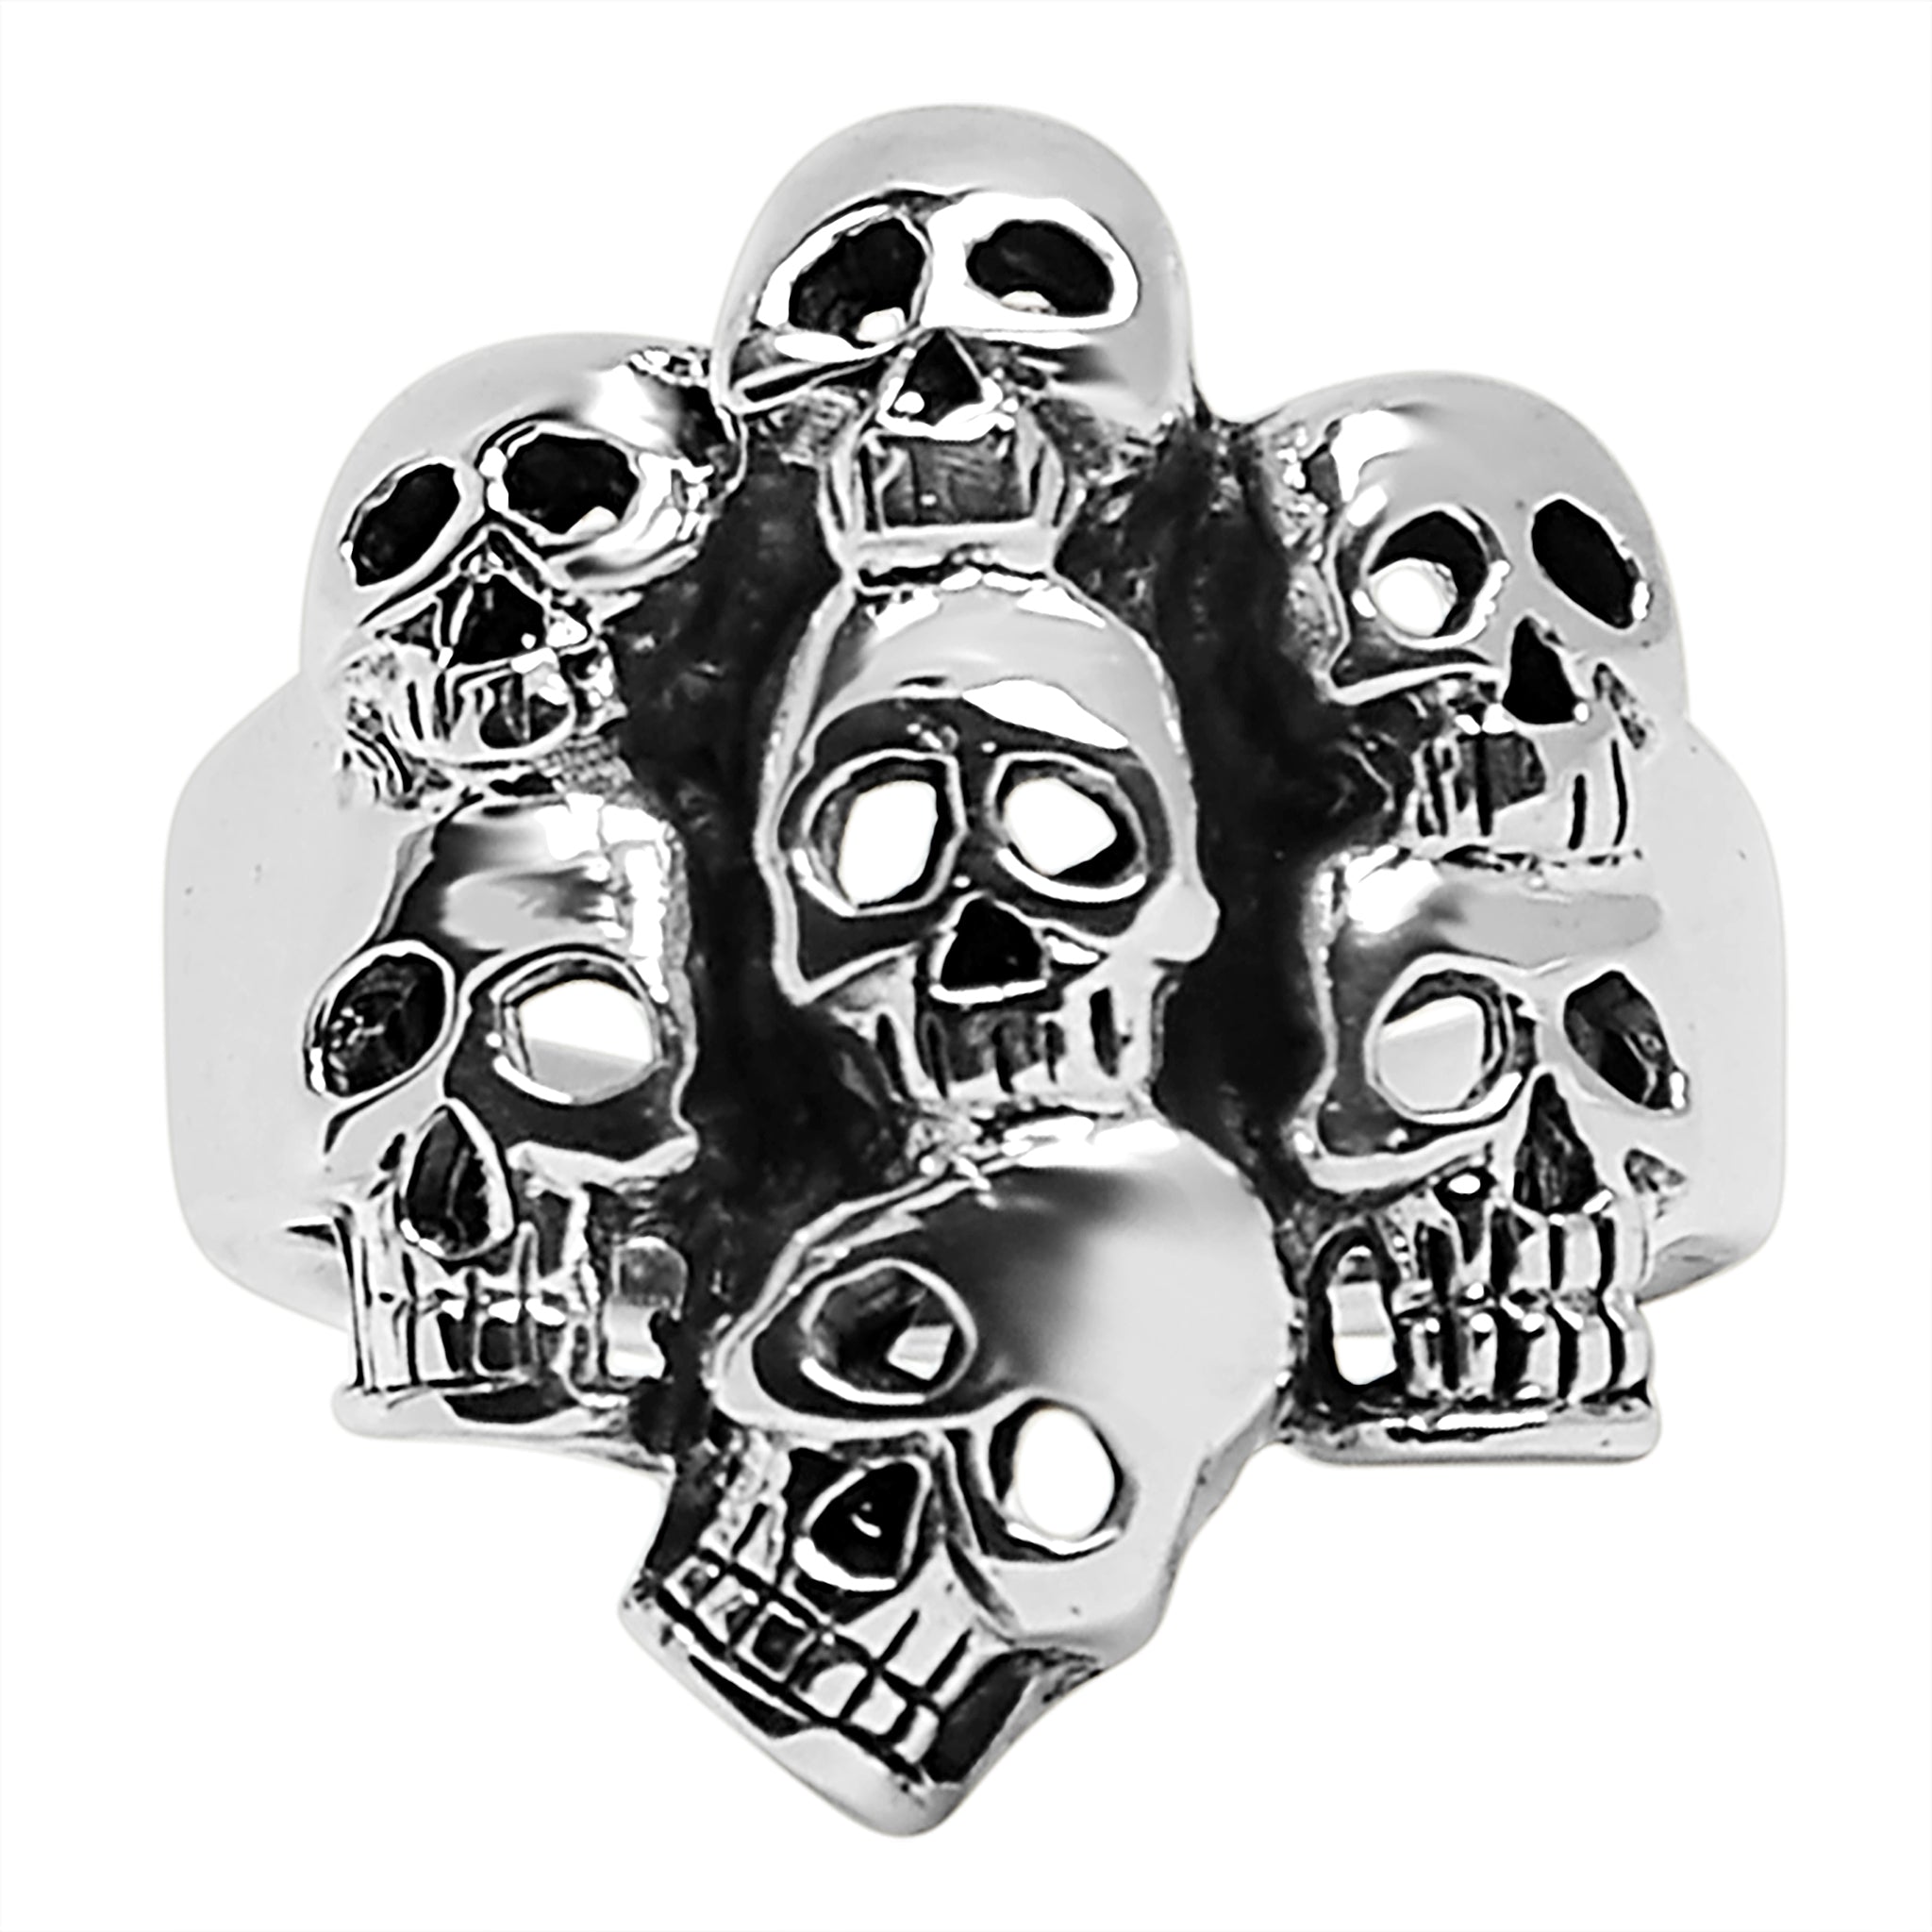 Sterling Silver Skull Pile Ring / SSR0024-sterling silver pendant- .925 sterling silver pendant- Black Friday Gift- silver pendant- necklace pendant